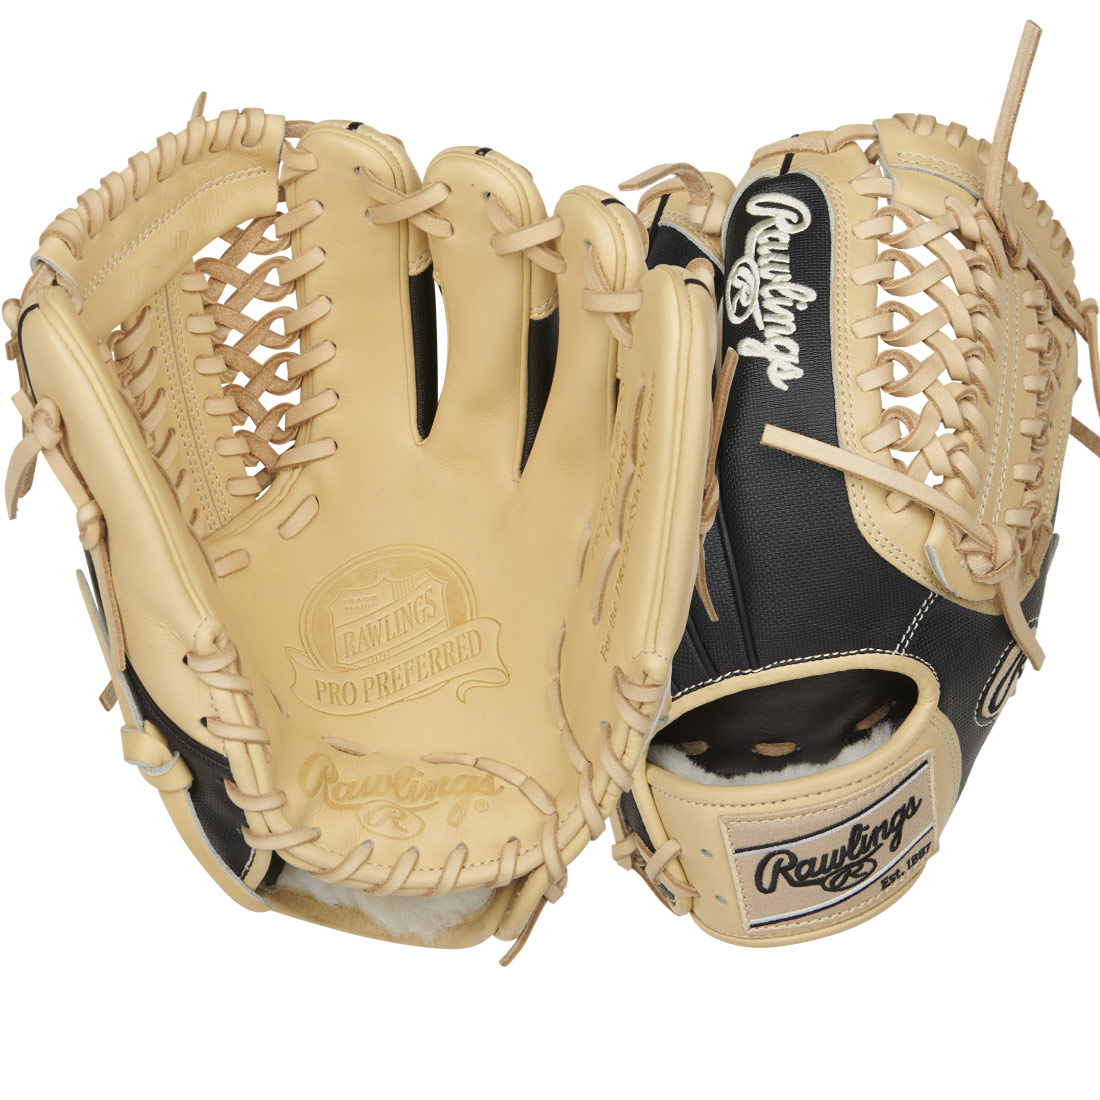 Rawlings Pro Preferred Baseball Glove 11.75\" PROS205-4CSS